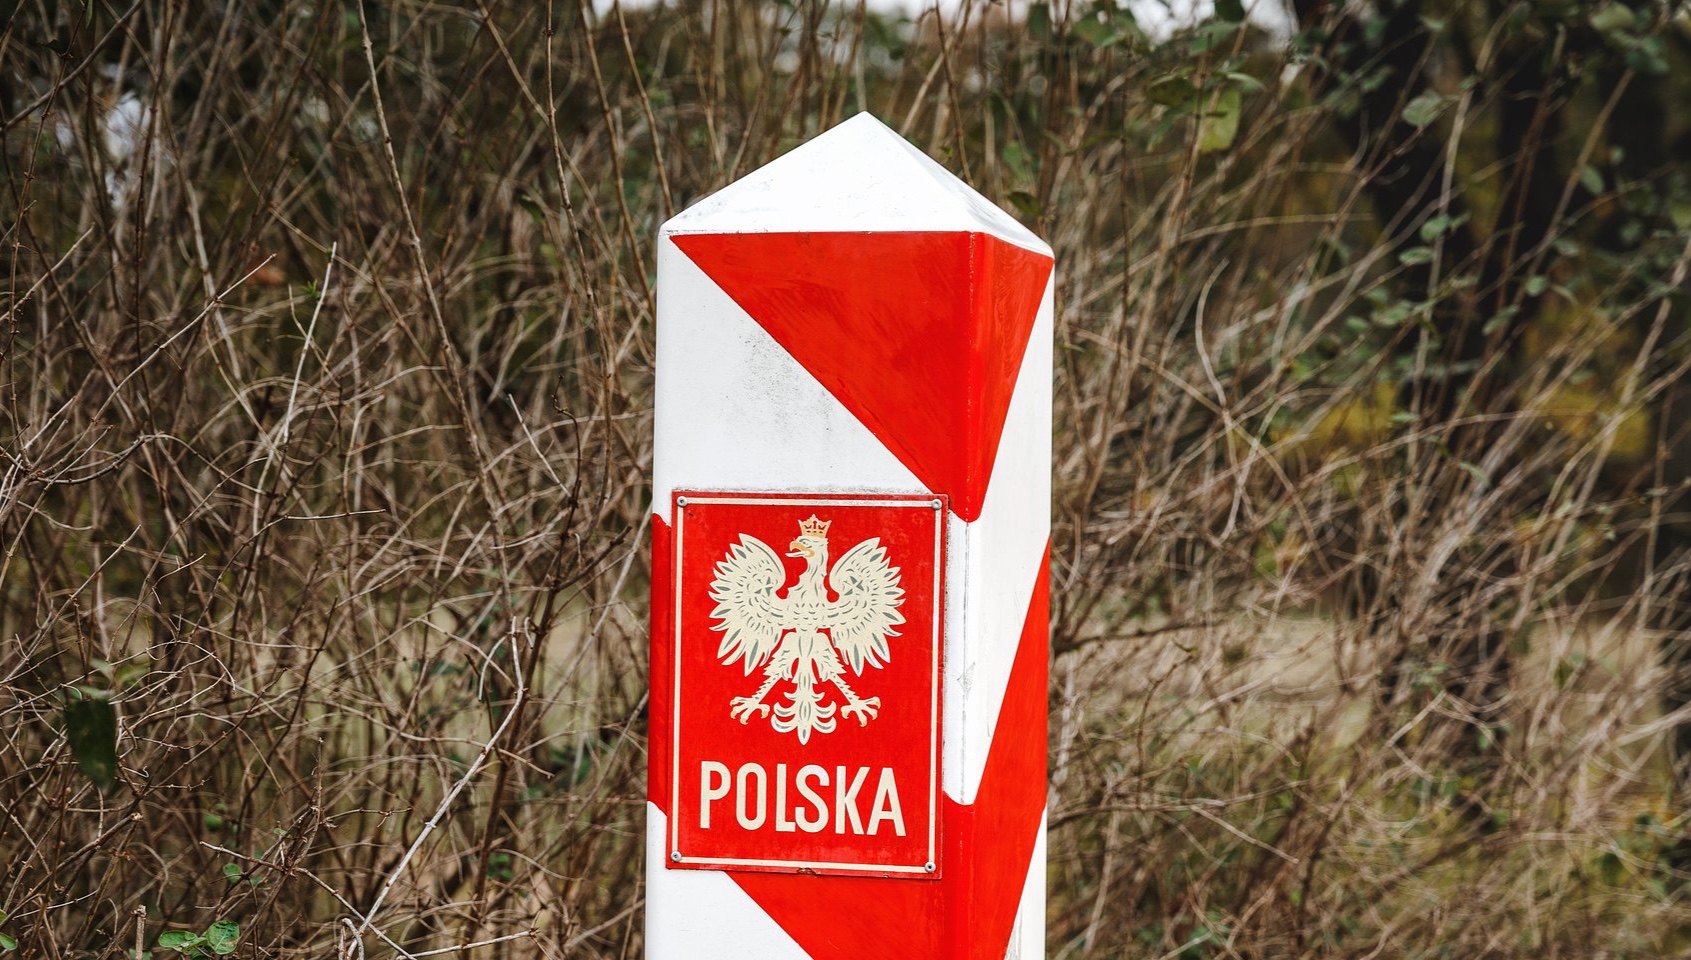 PKO Bank Polski supports the Border Guard